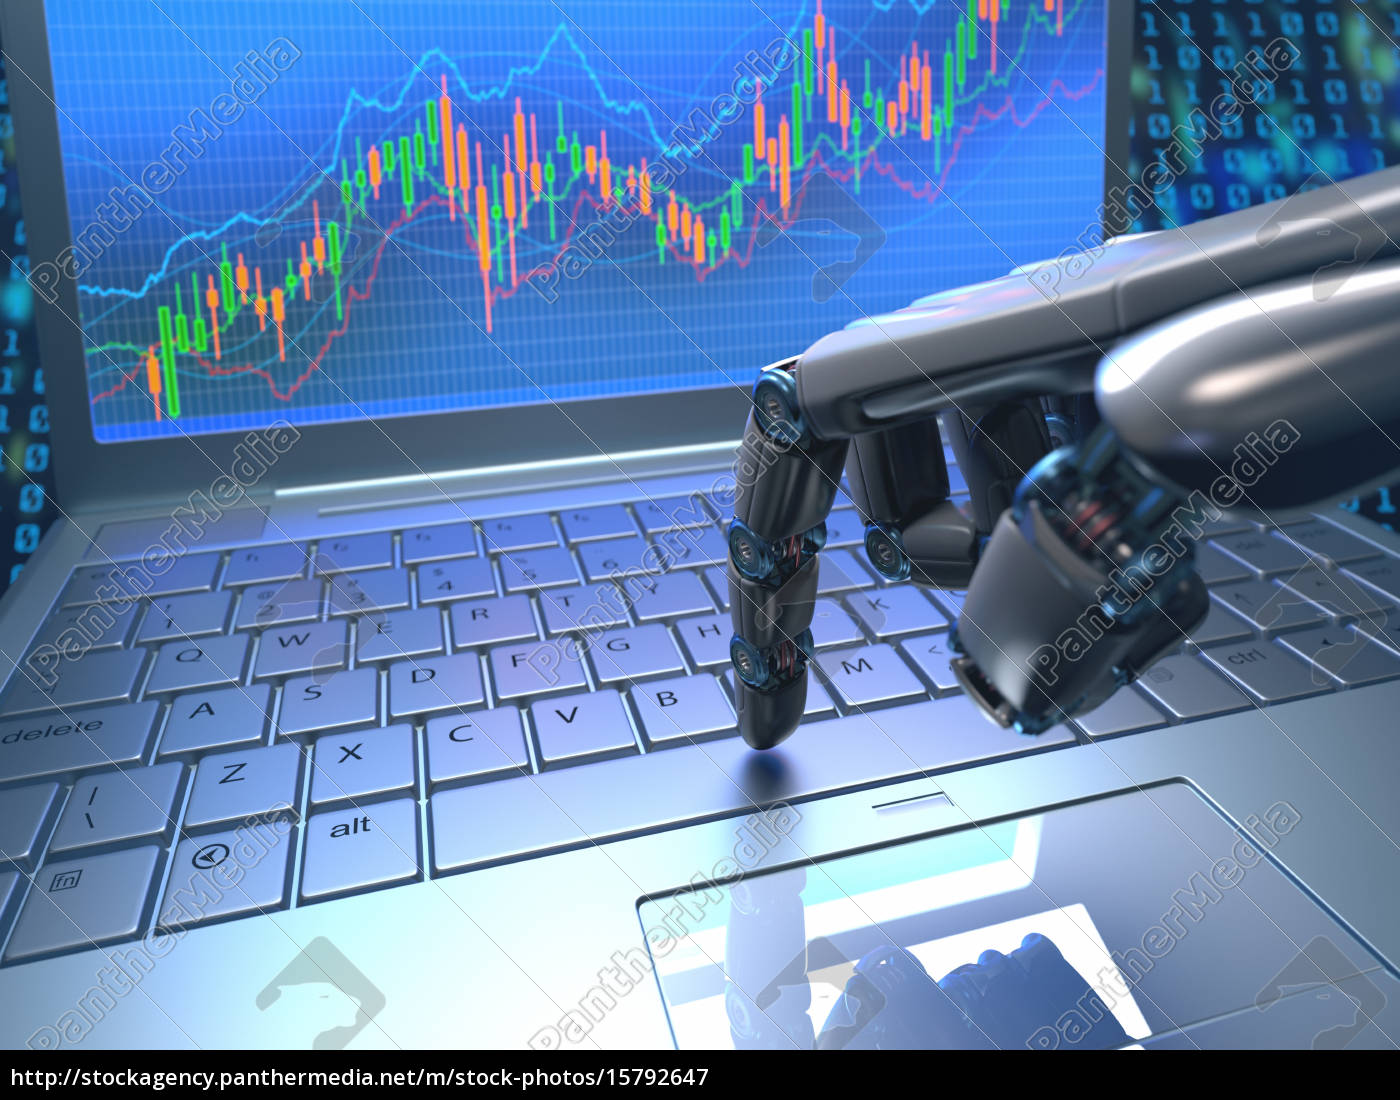 Artificial Intelligence Stocks - Investing